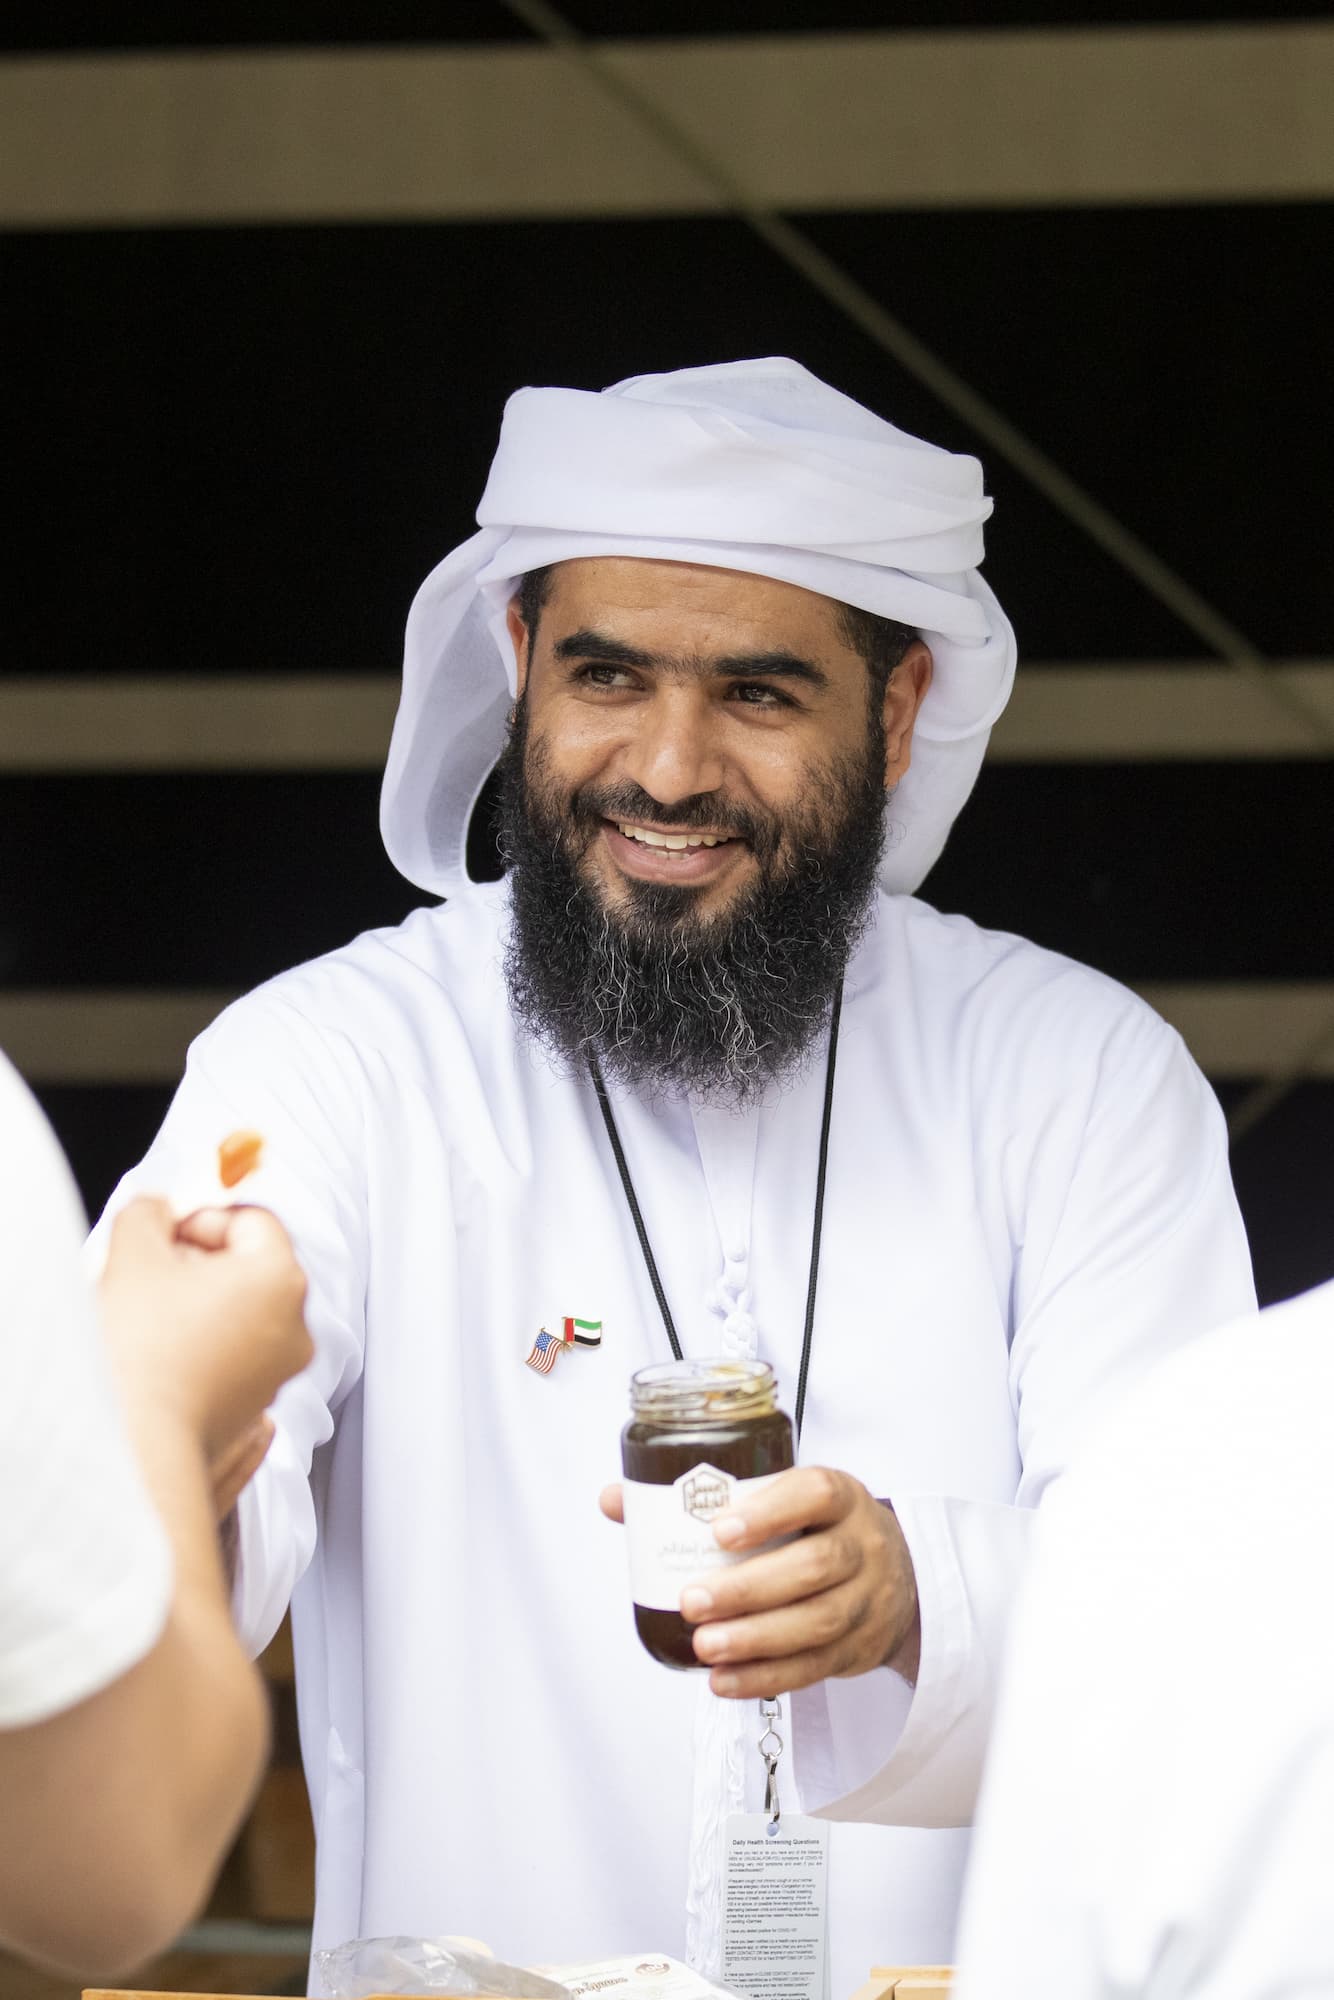 Manea Al Kaabi smiling, holding a jar of honey